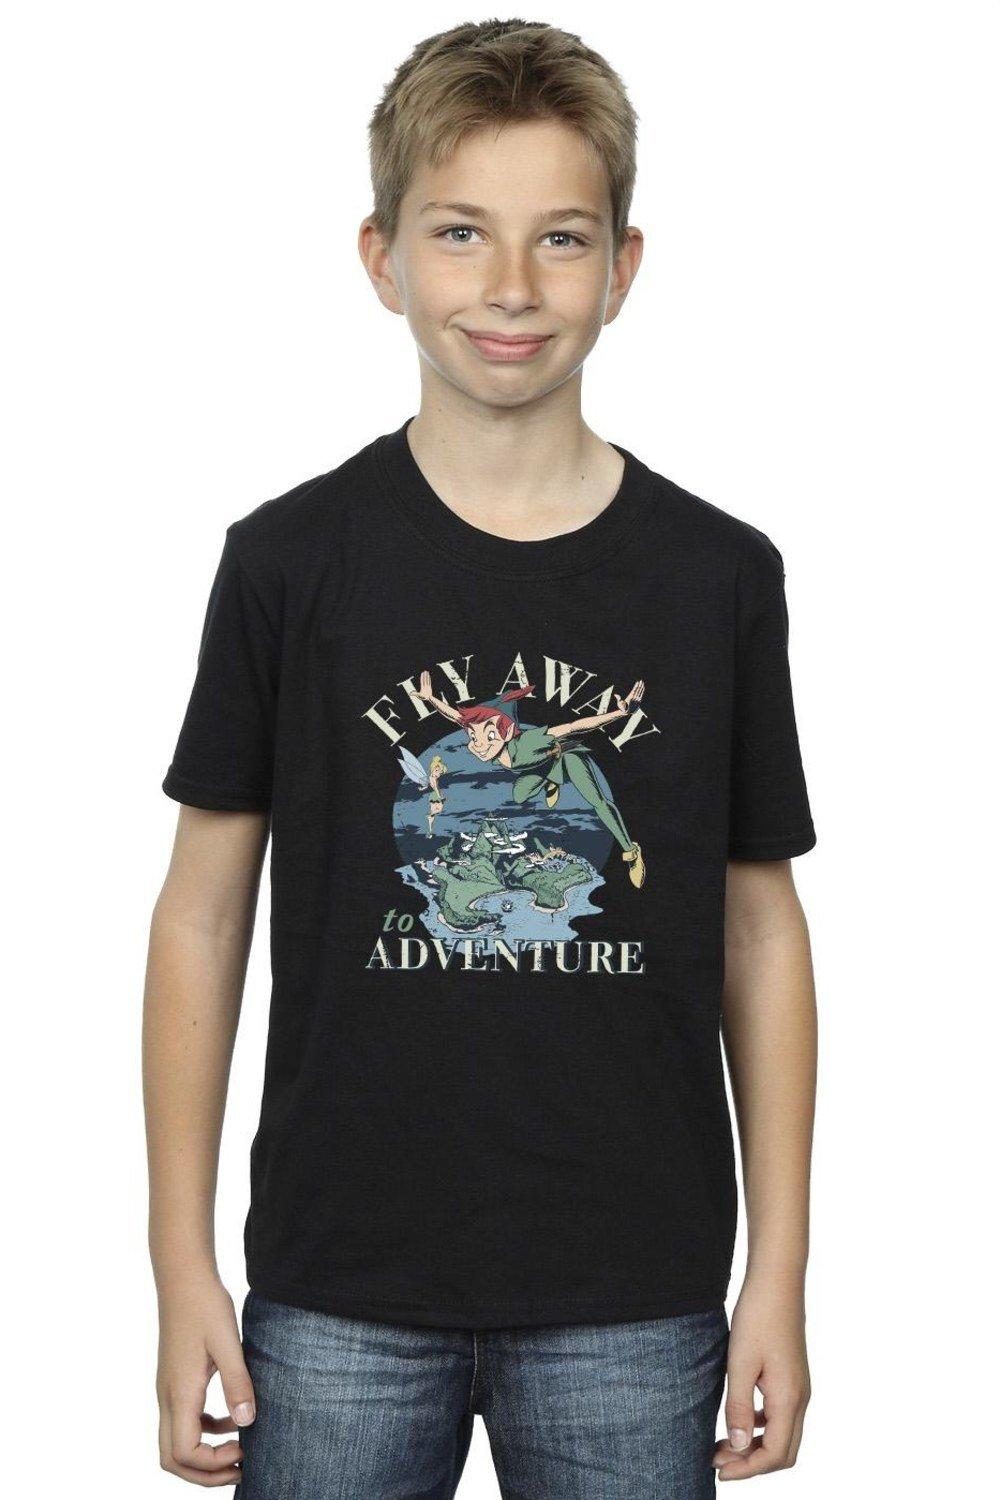 Peter Pan Fly Away To Adventure T-Shirt